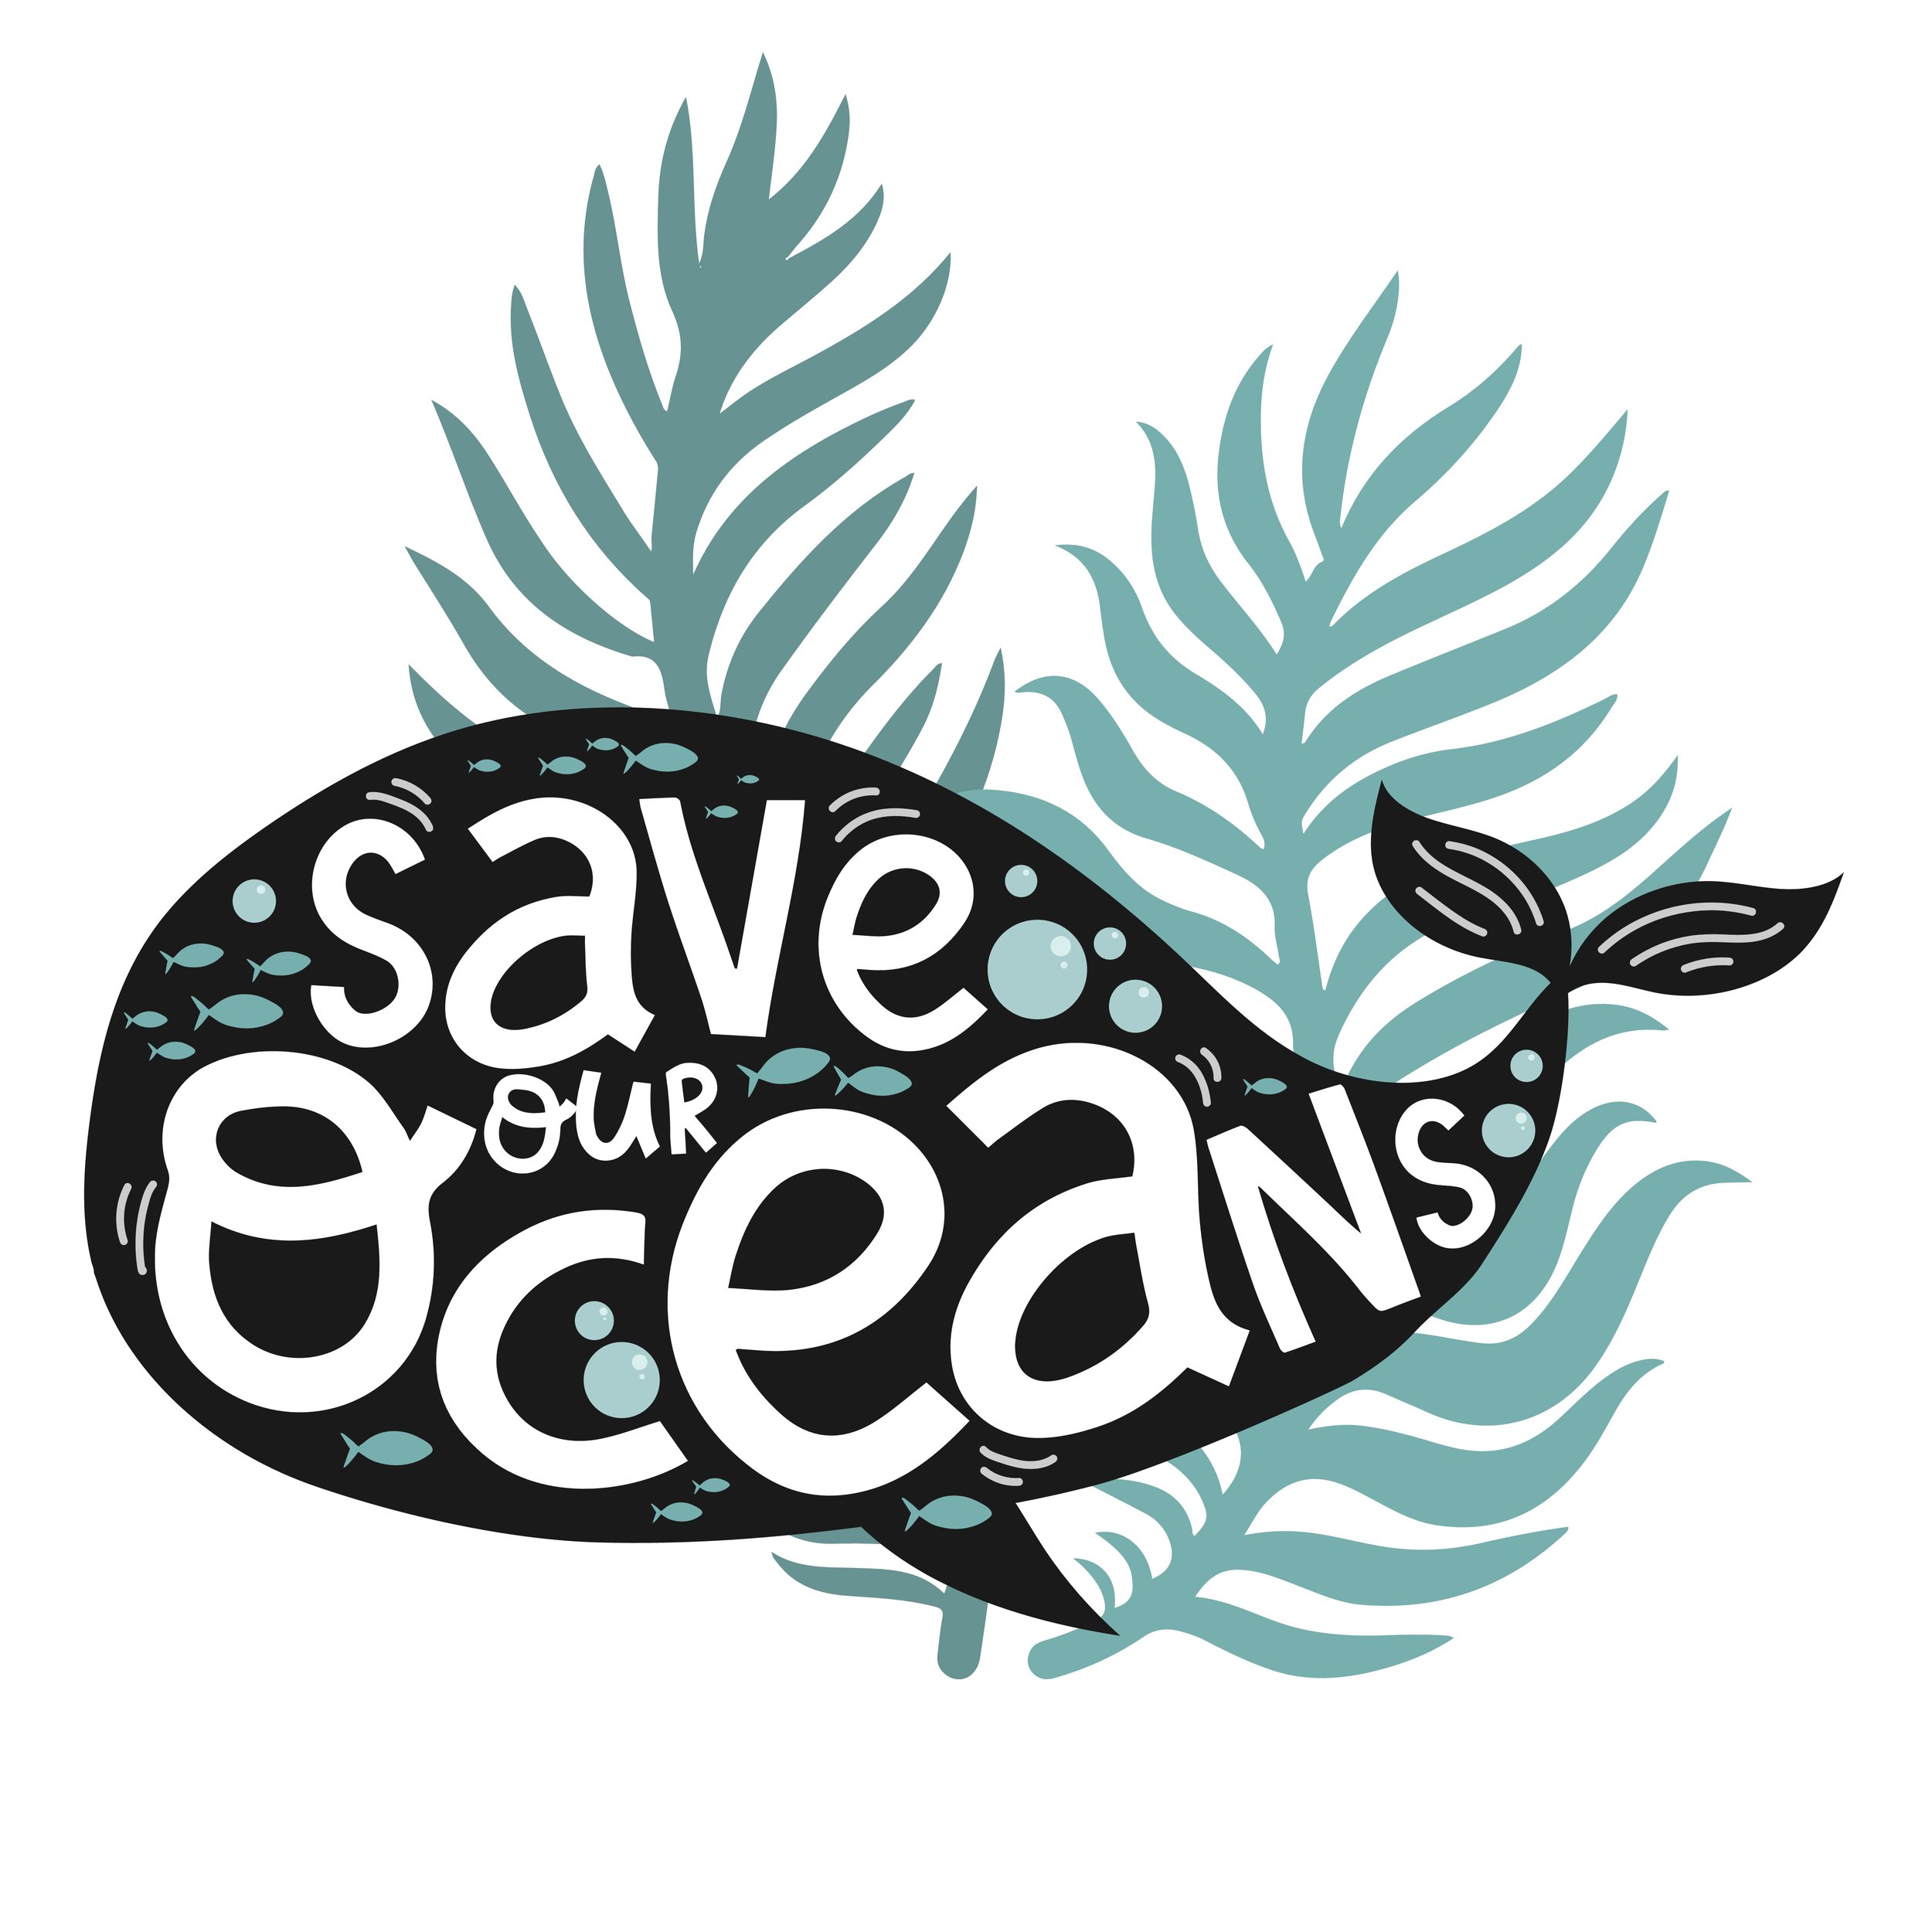 caterpillar care ® - save our oceans.jpg